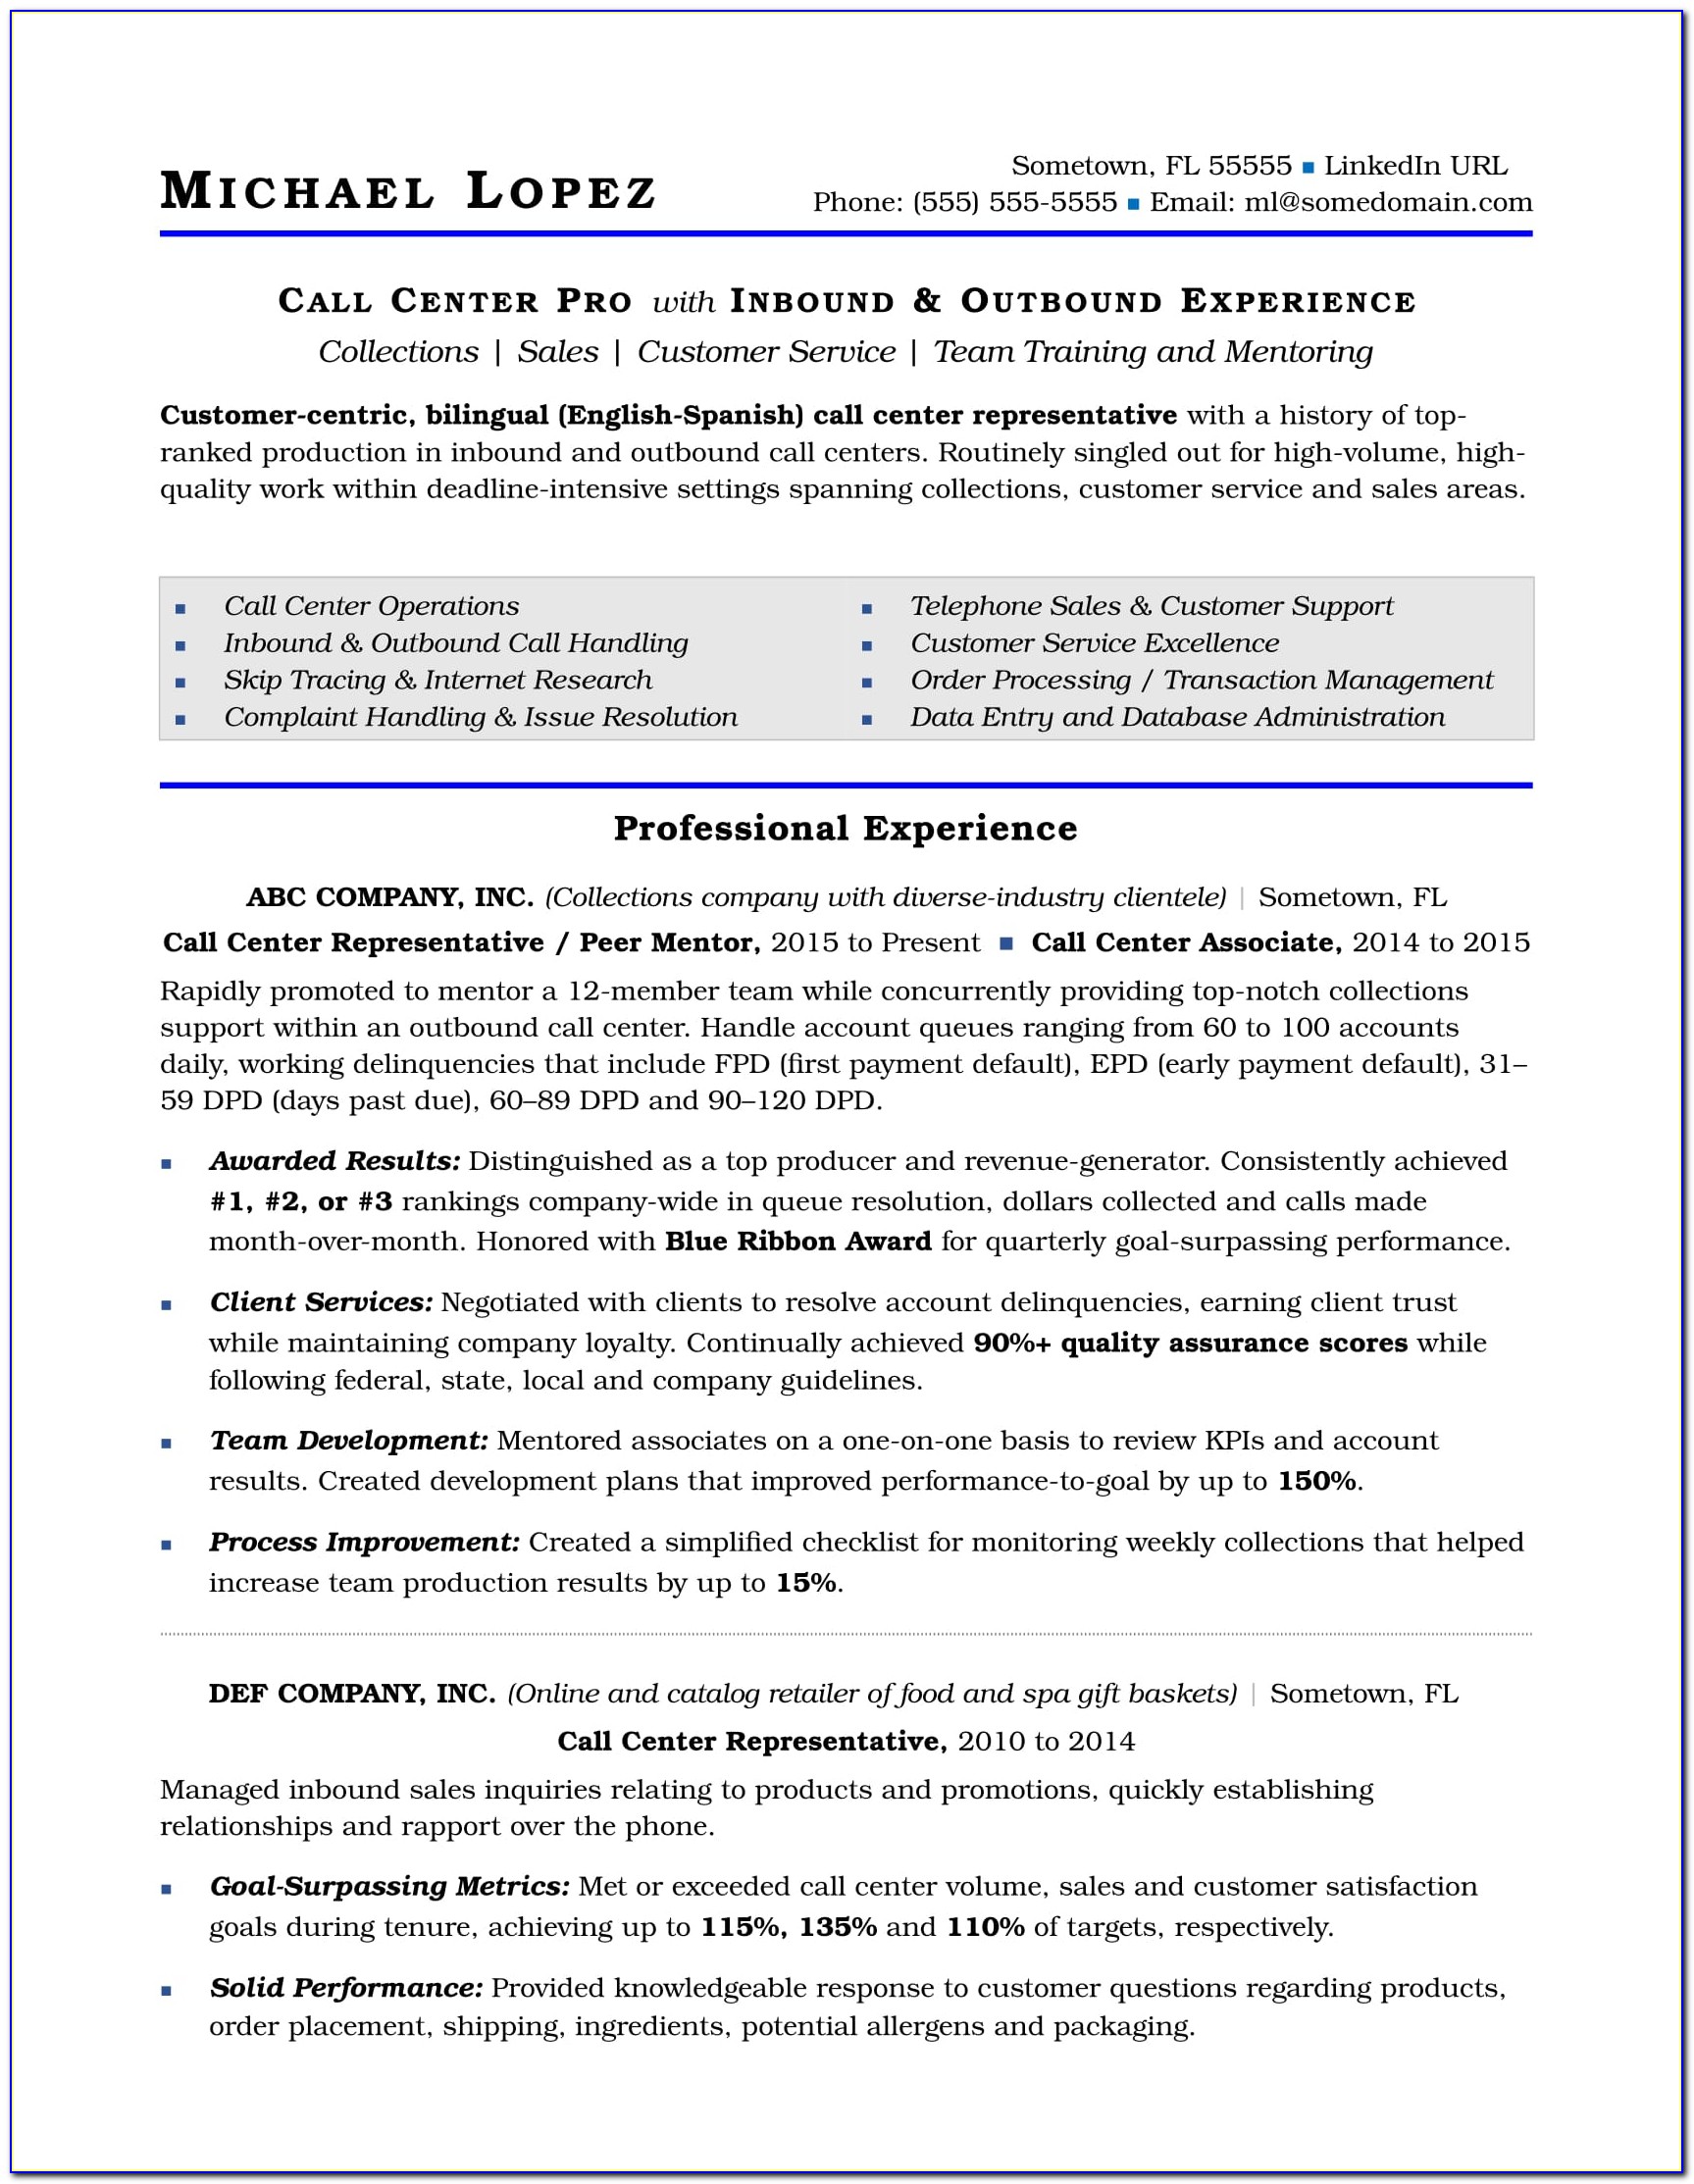 Call Center Resume Format For Freshers